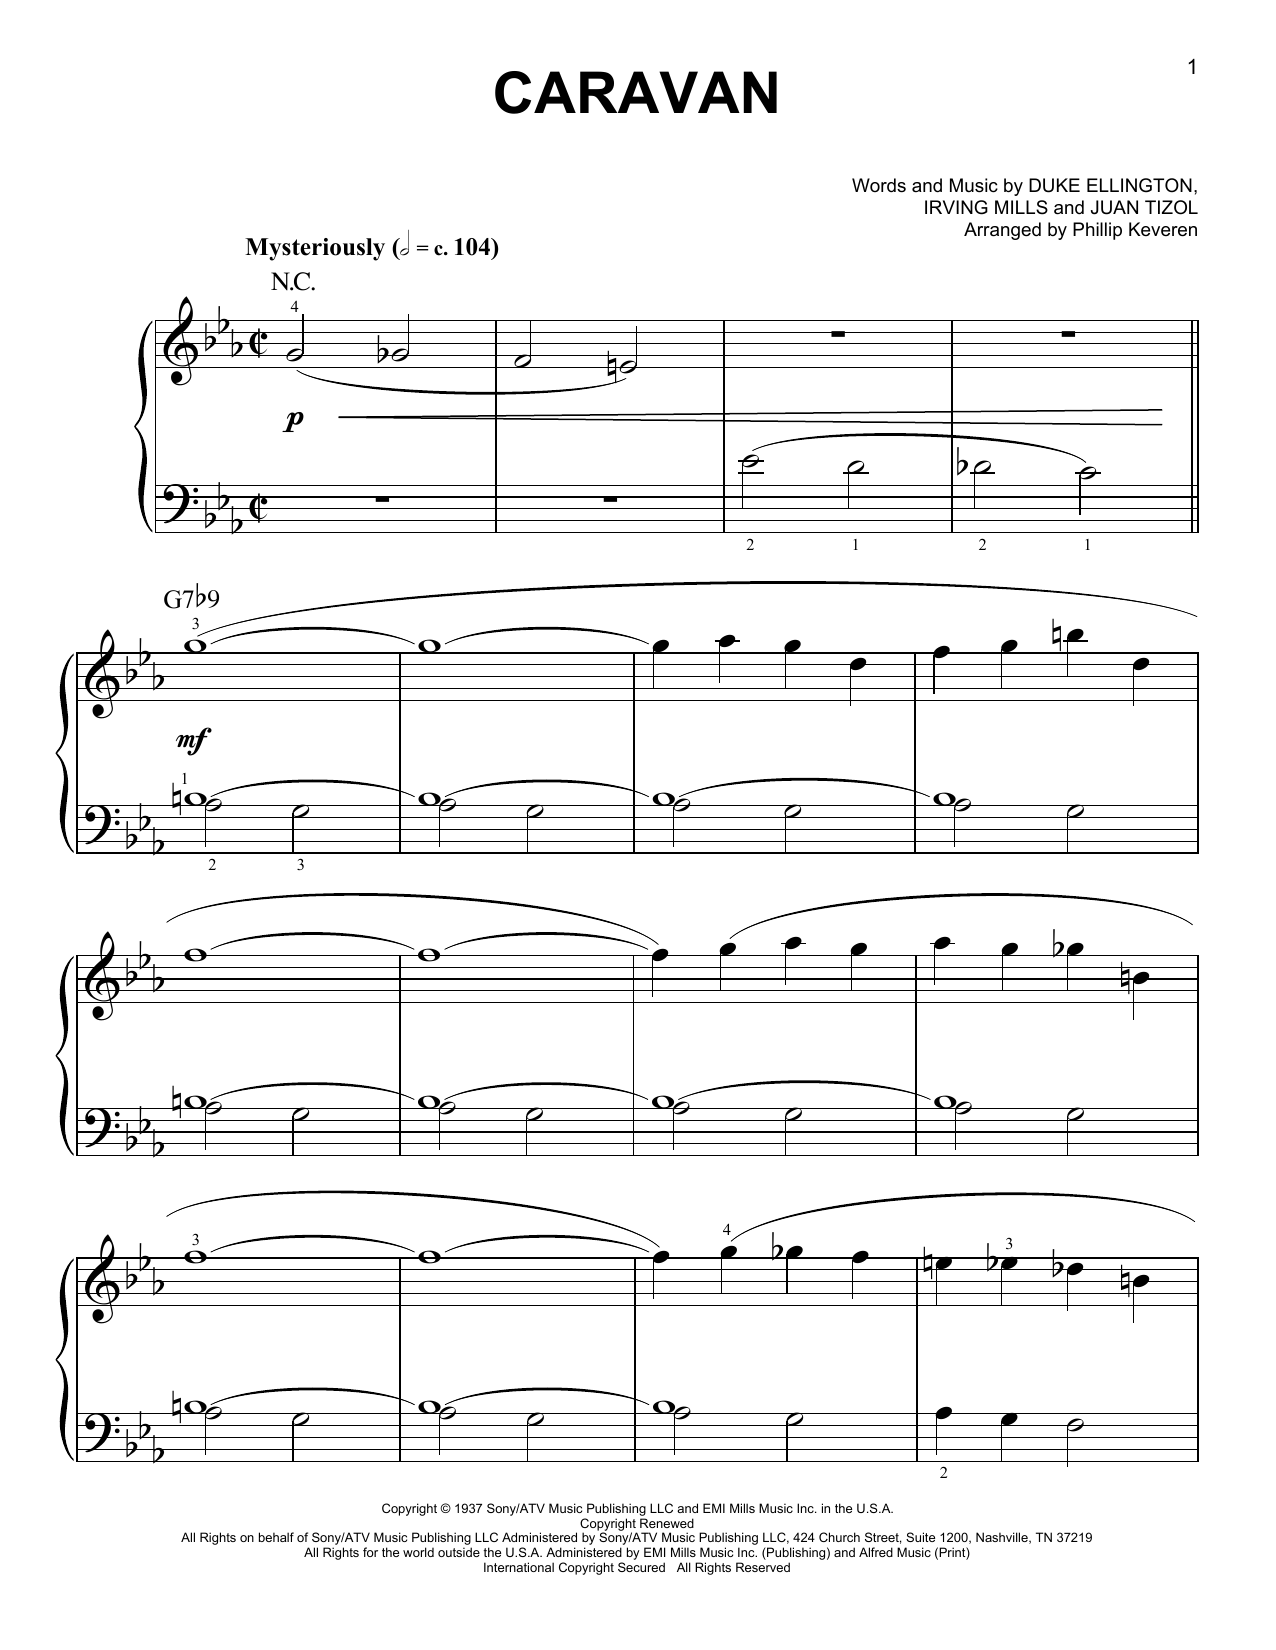 Download Duke Ellington Caravan (arr. Phillip Keveren) Sheet Music and learn how to play Easy Piano PDF digital score in minutes